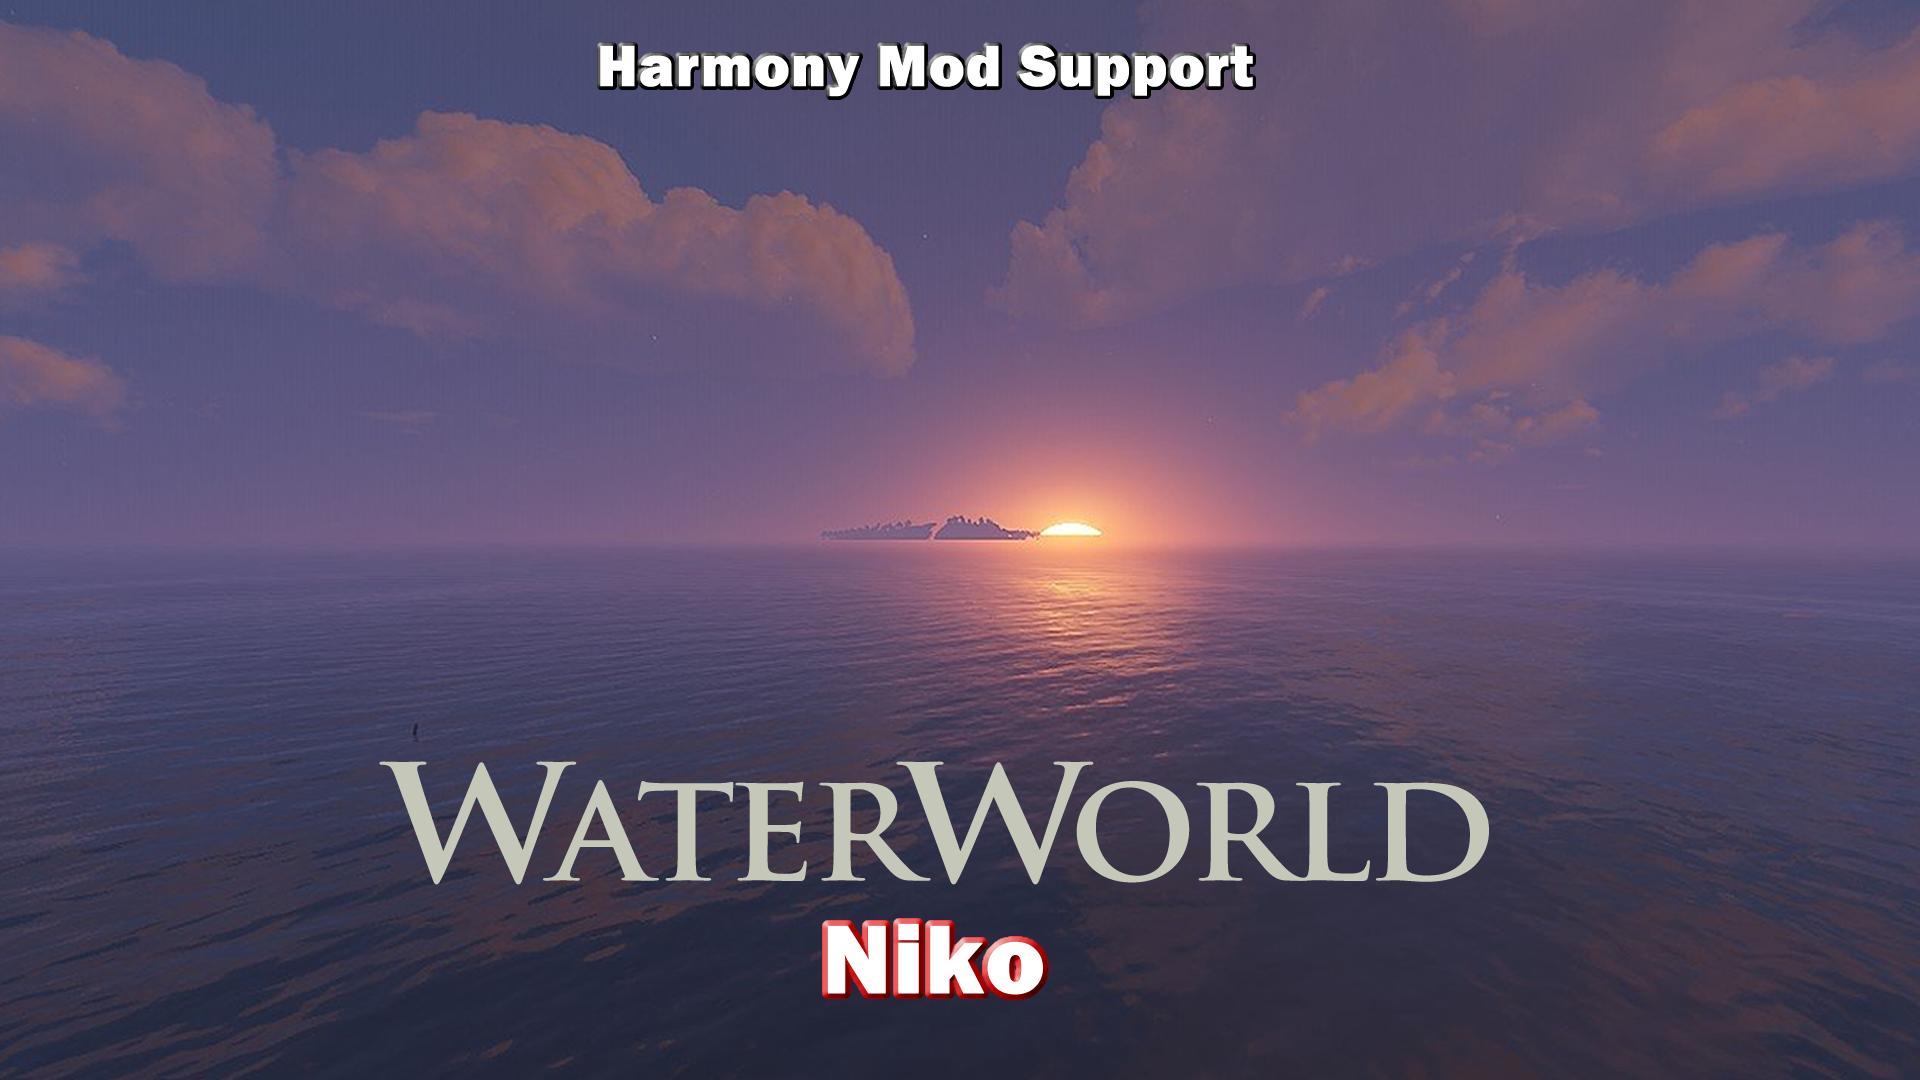 Waterworld Custom Map by Niko (Harmony Mod Support)